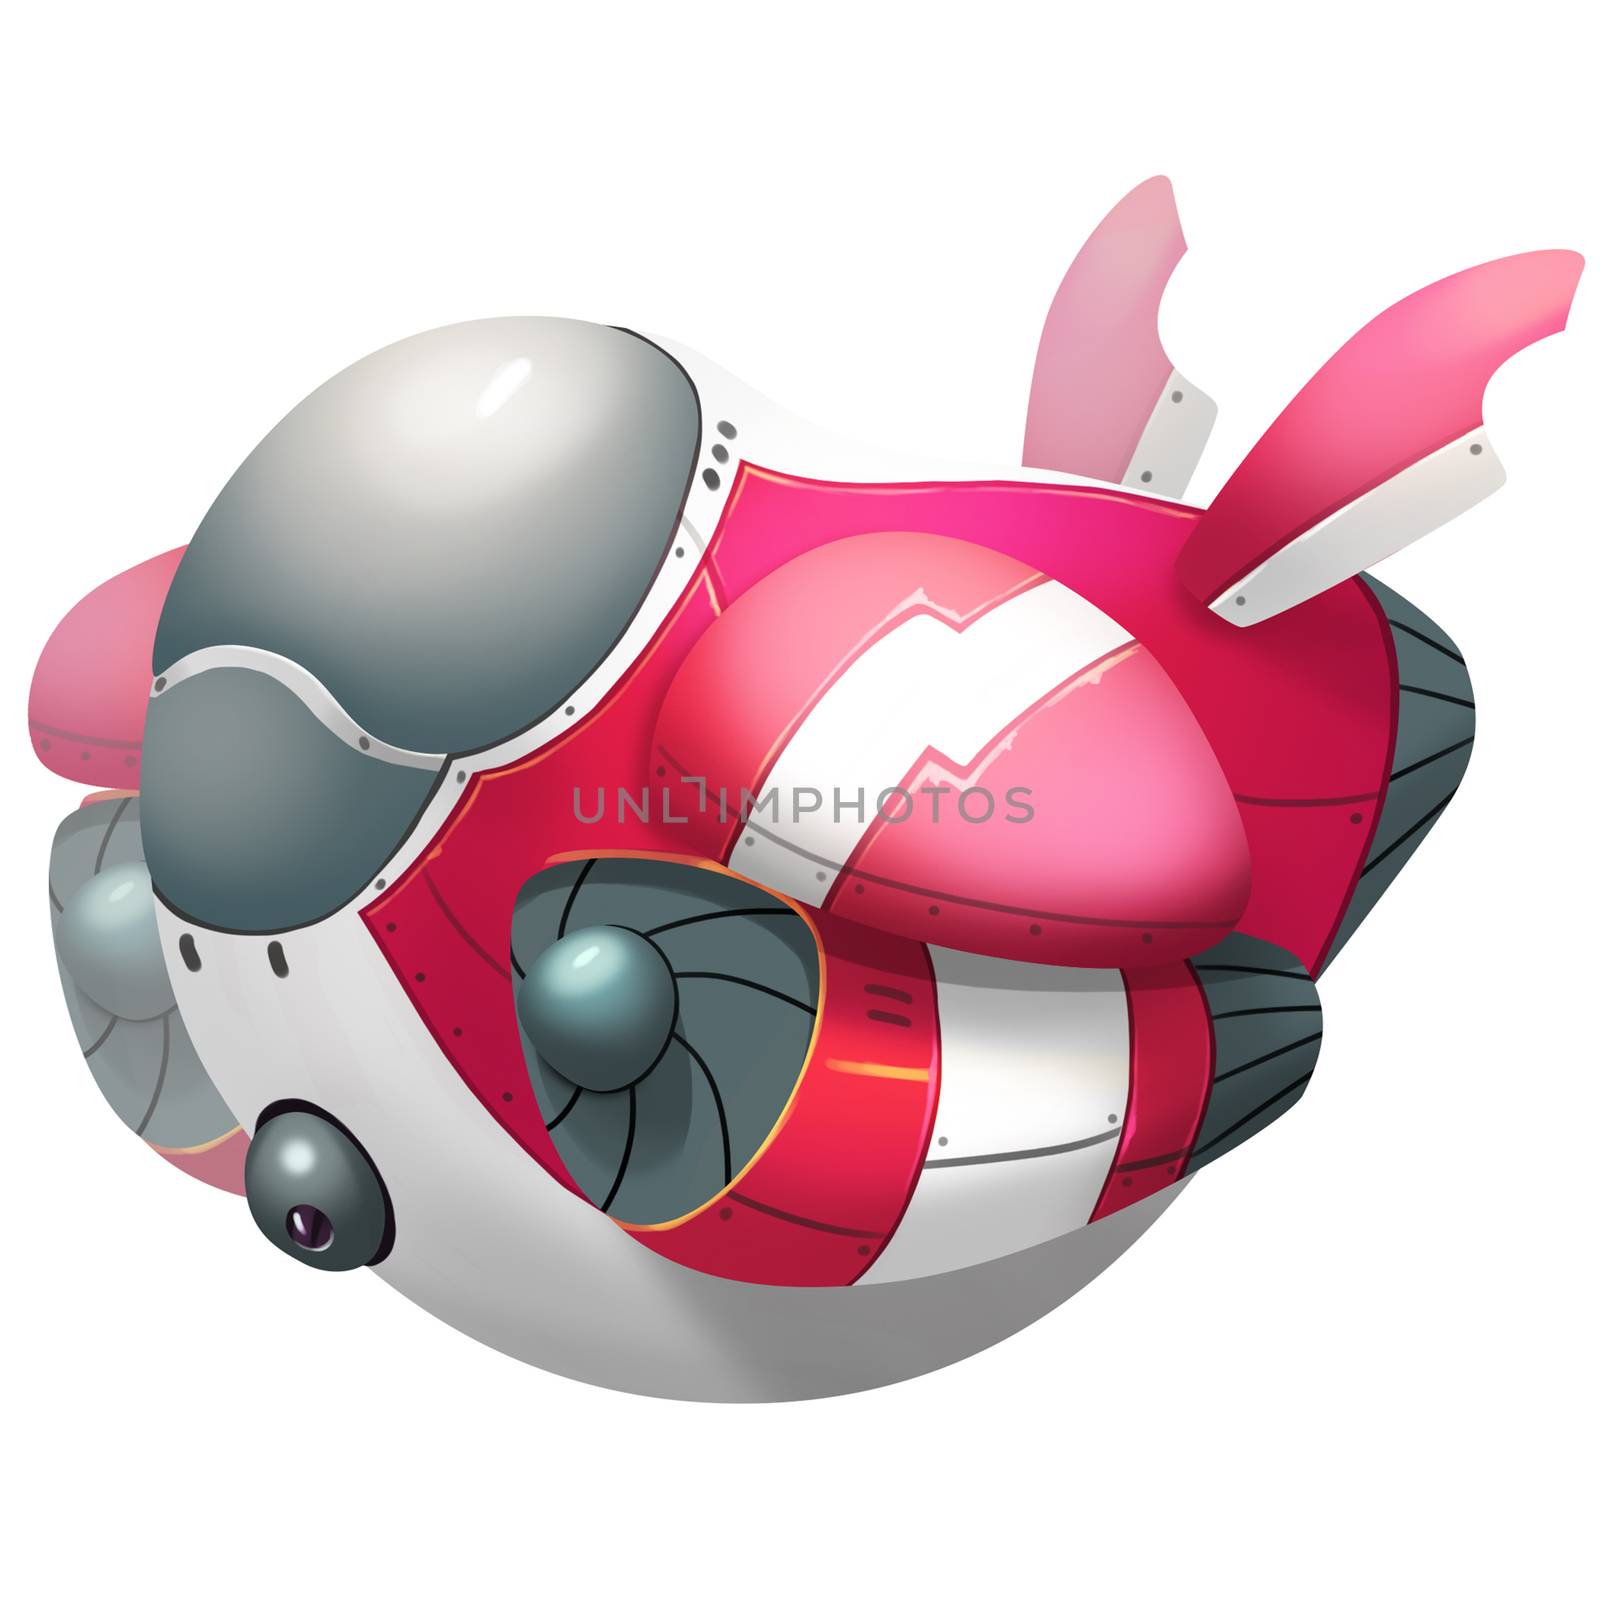 Illustration: Robot Island Elements: The Aircraft - Element Design - Fantastic/Sci-fi Style by NextMars